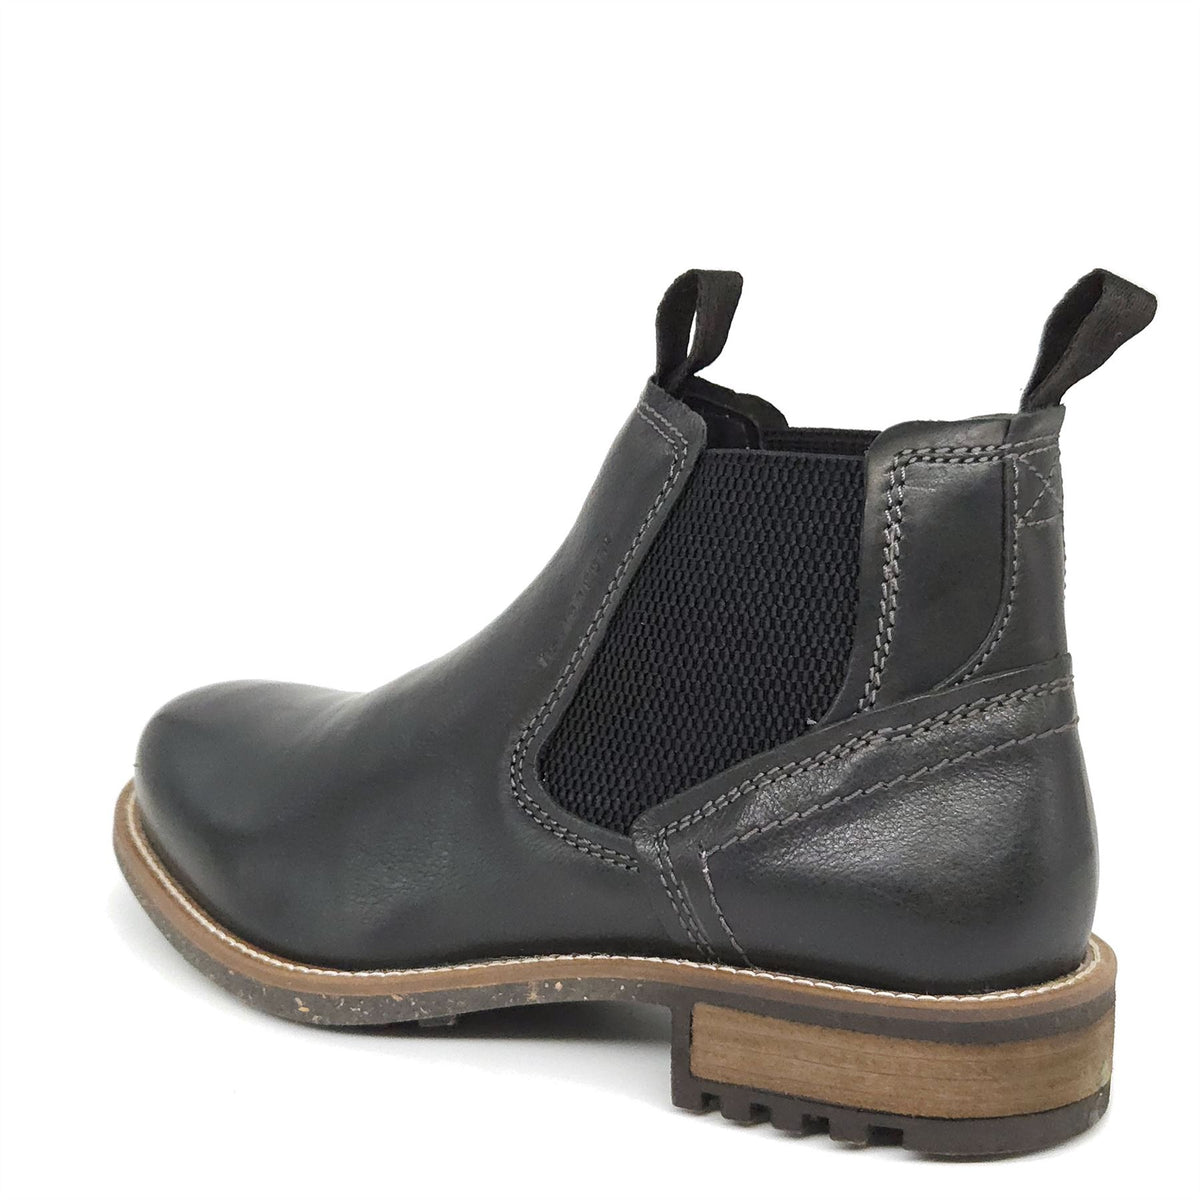 HX London Merton Chelsea Leather Boots